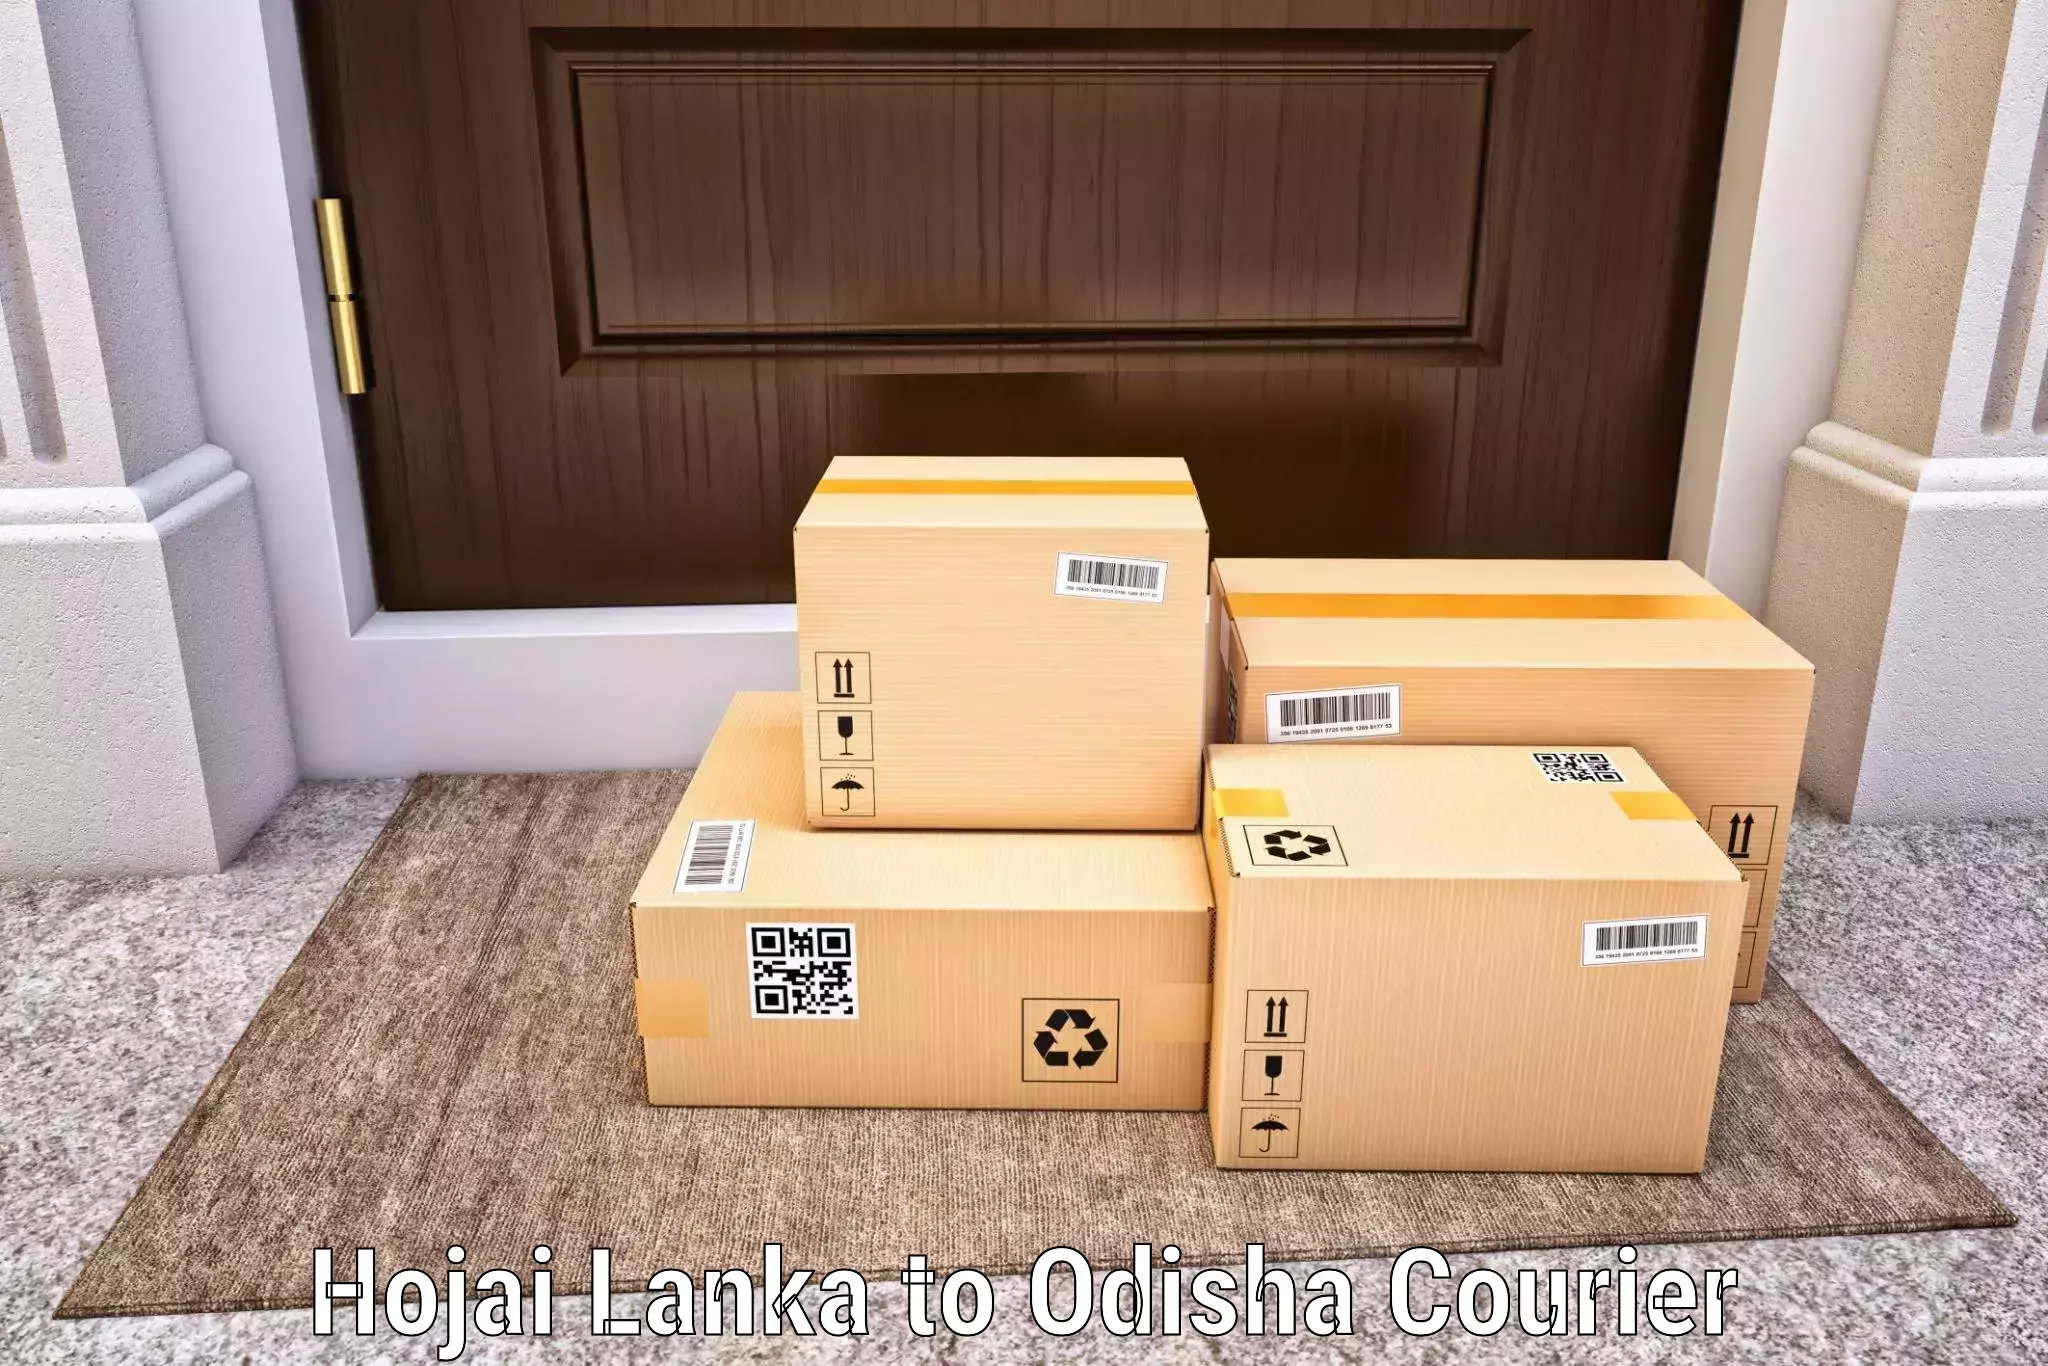 Round-the-clock parcel delivery Hojai Lanka to Kotapad